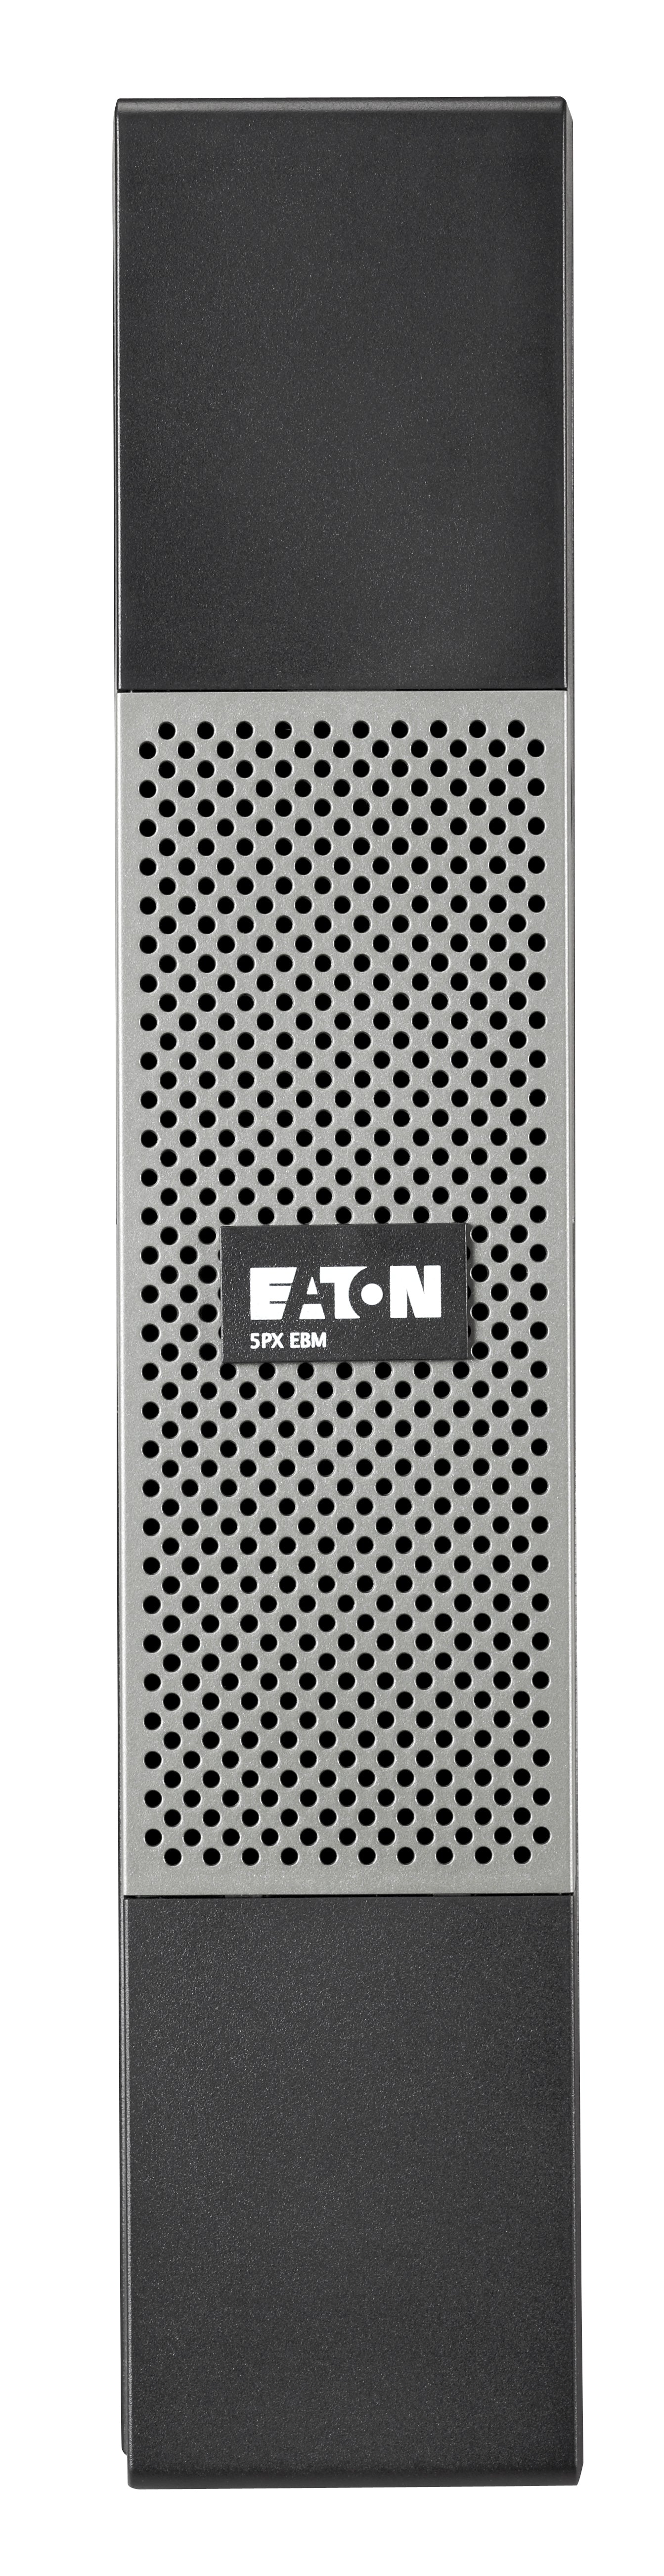 Eaton 5Px Ebm 72V Rt2U Sealed Lead Acid (Vrla)